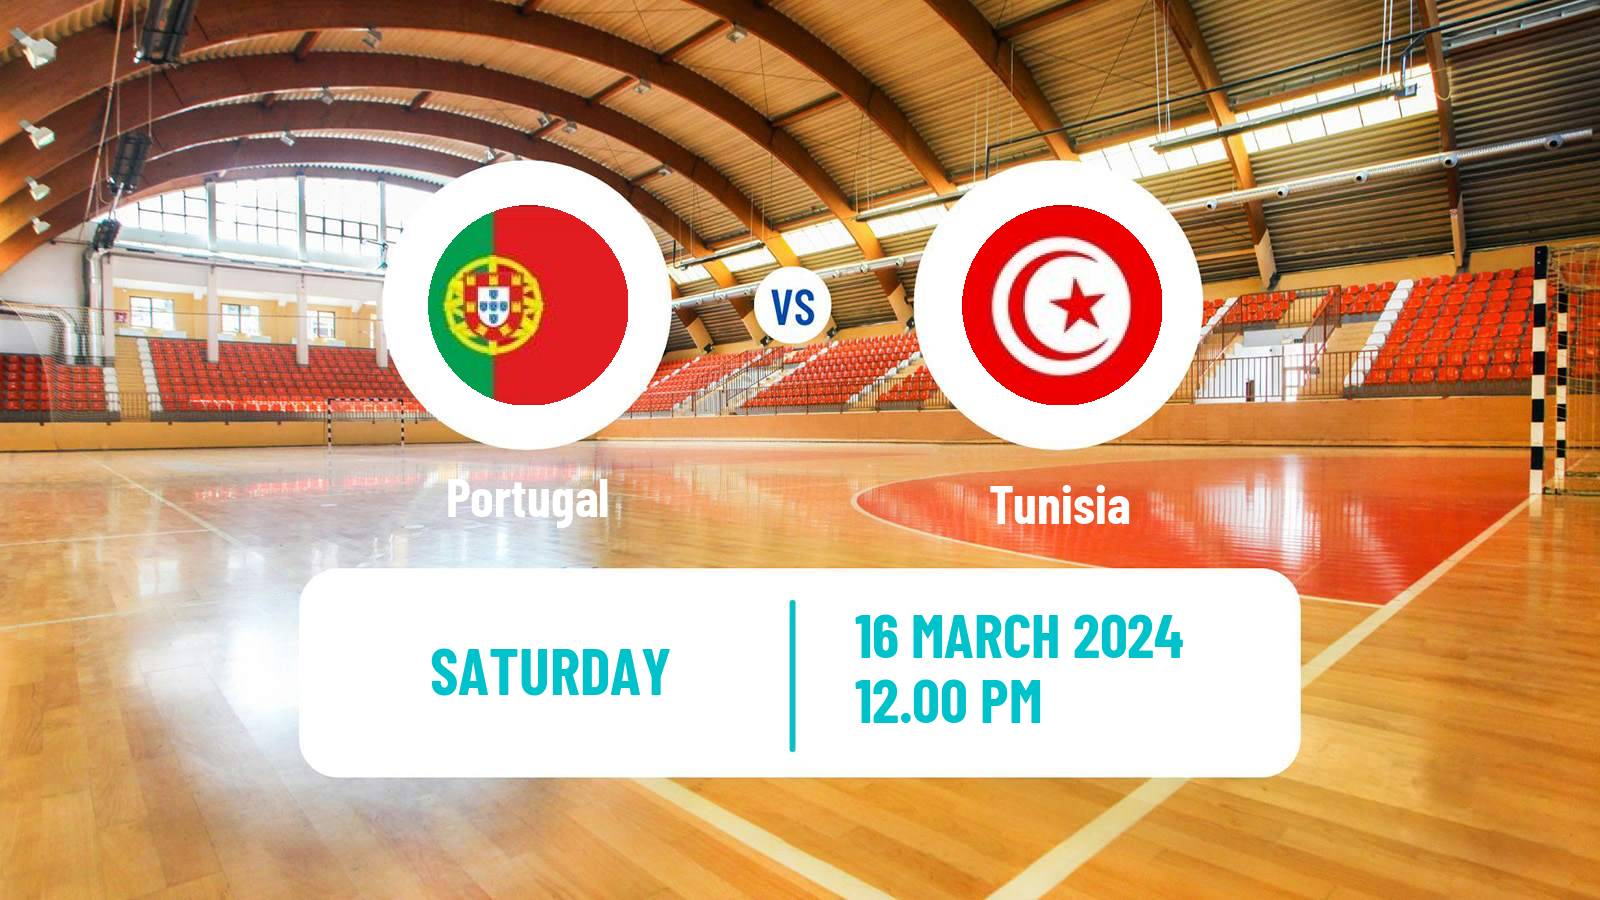 Handball Olympic Games - Handball Portugal - Tunisia